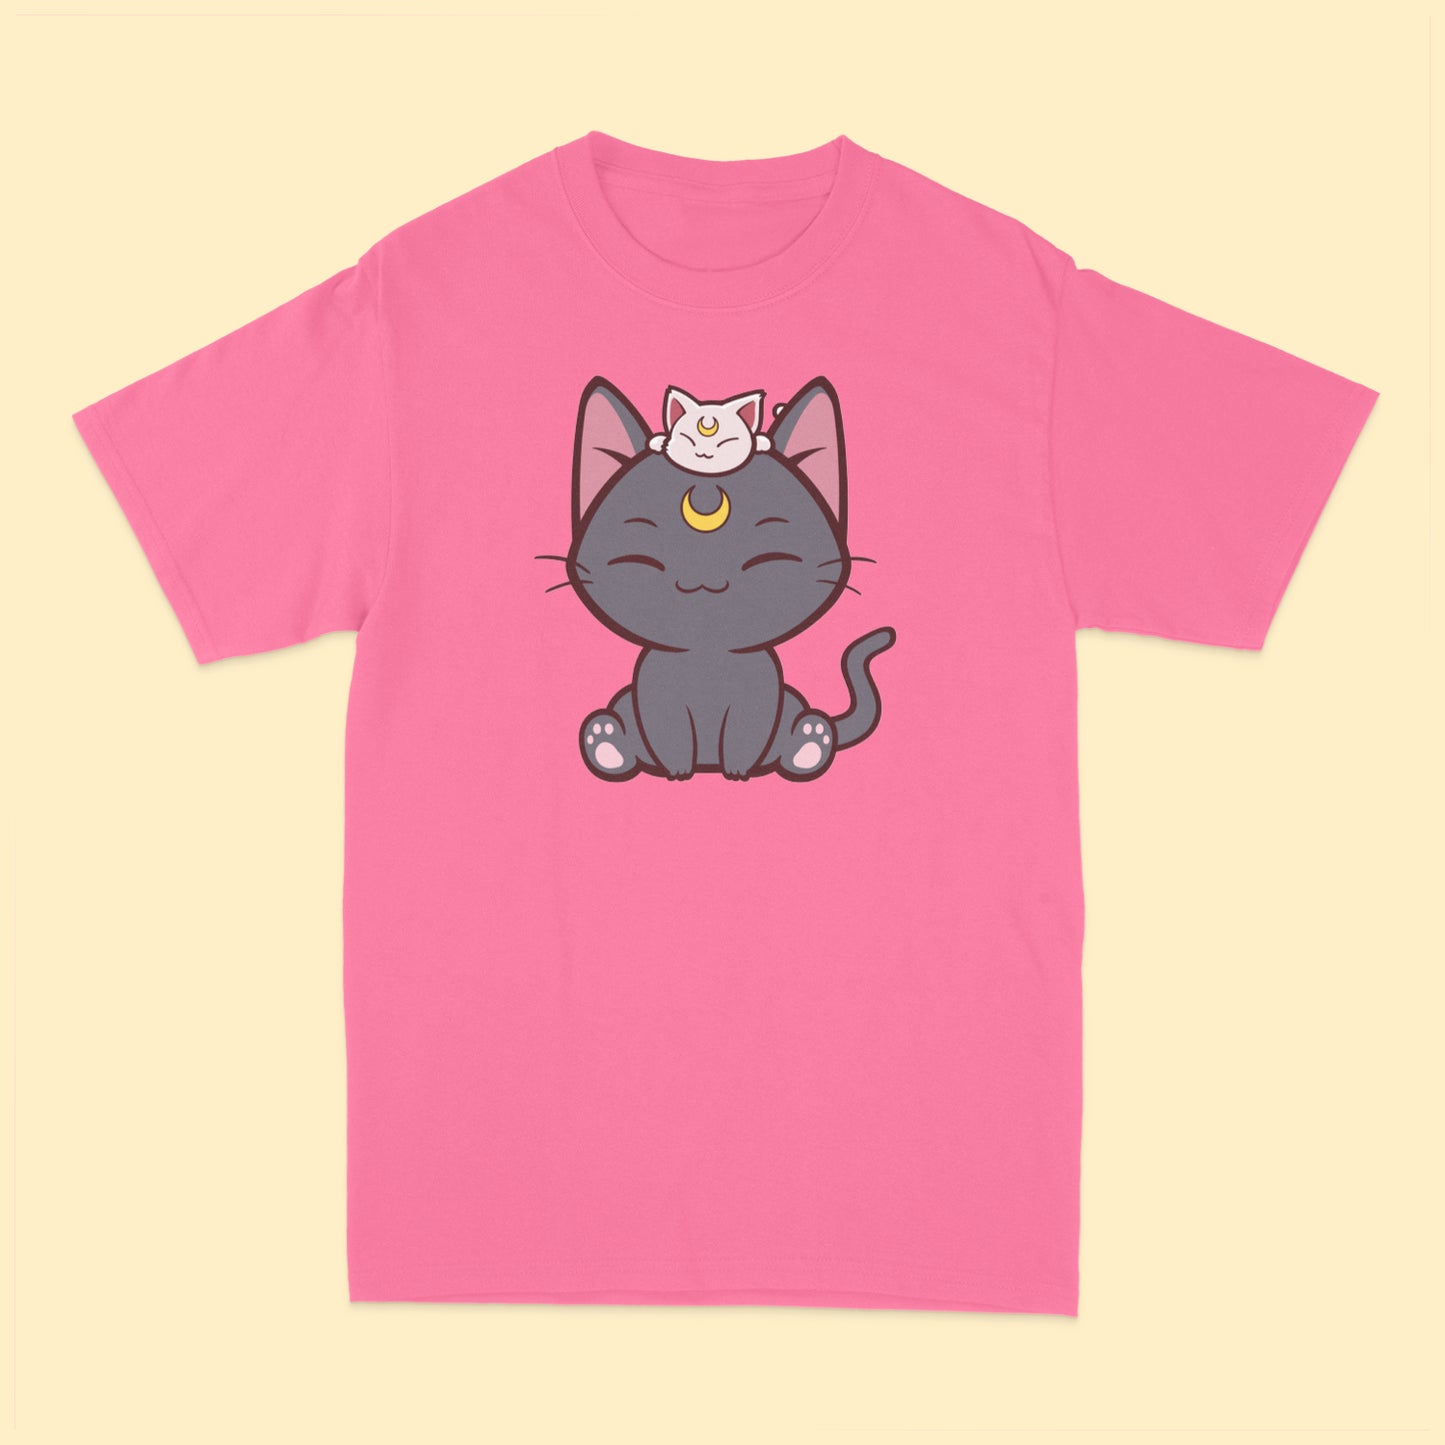 Luna and Artemis Moon Cats T-Shirt